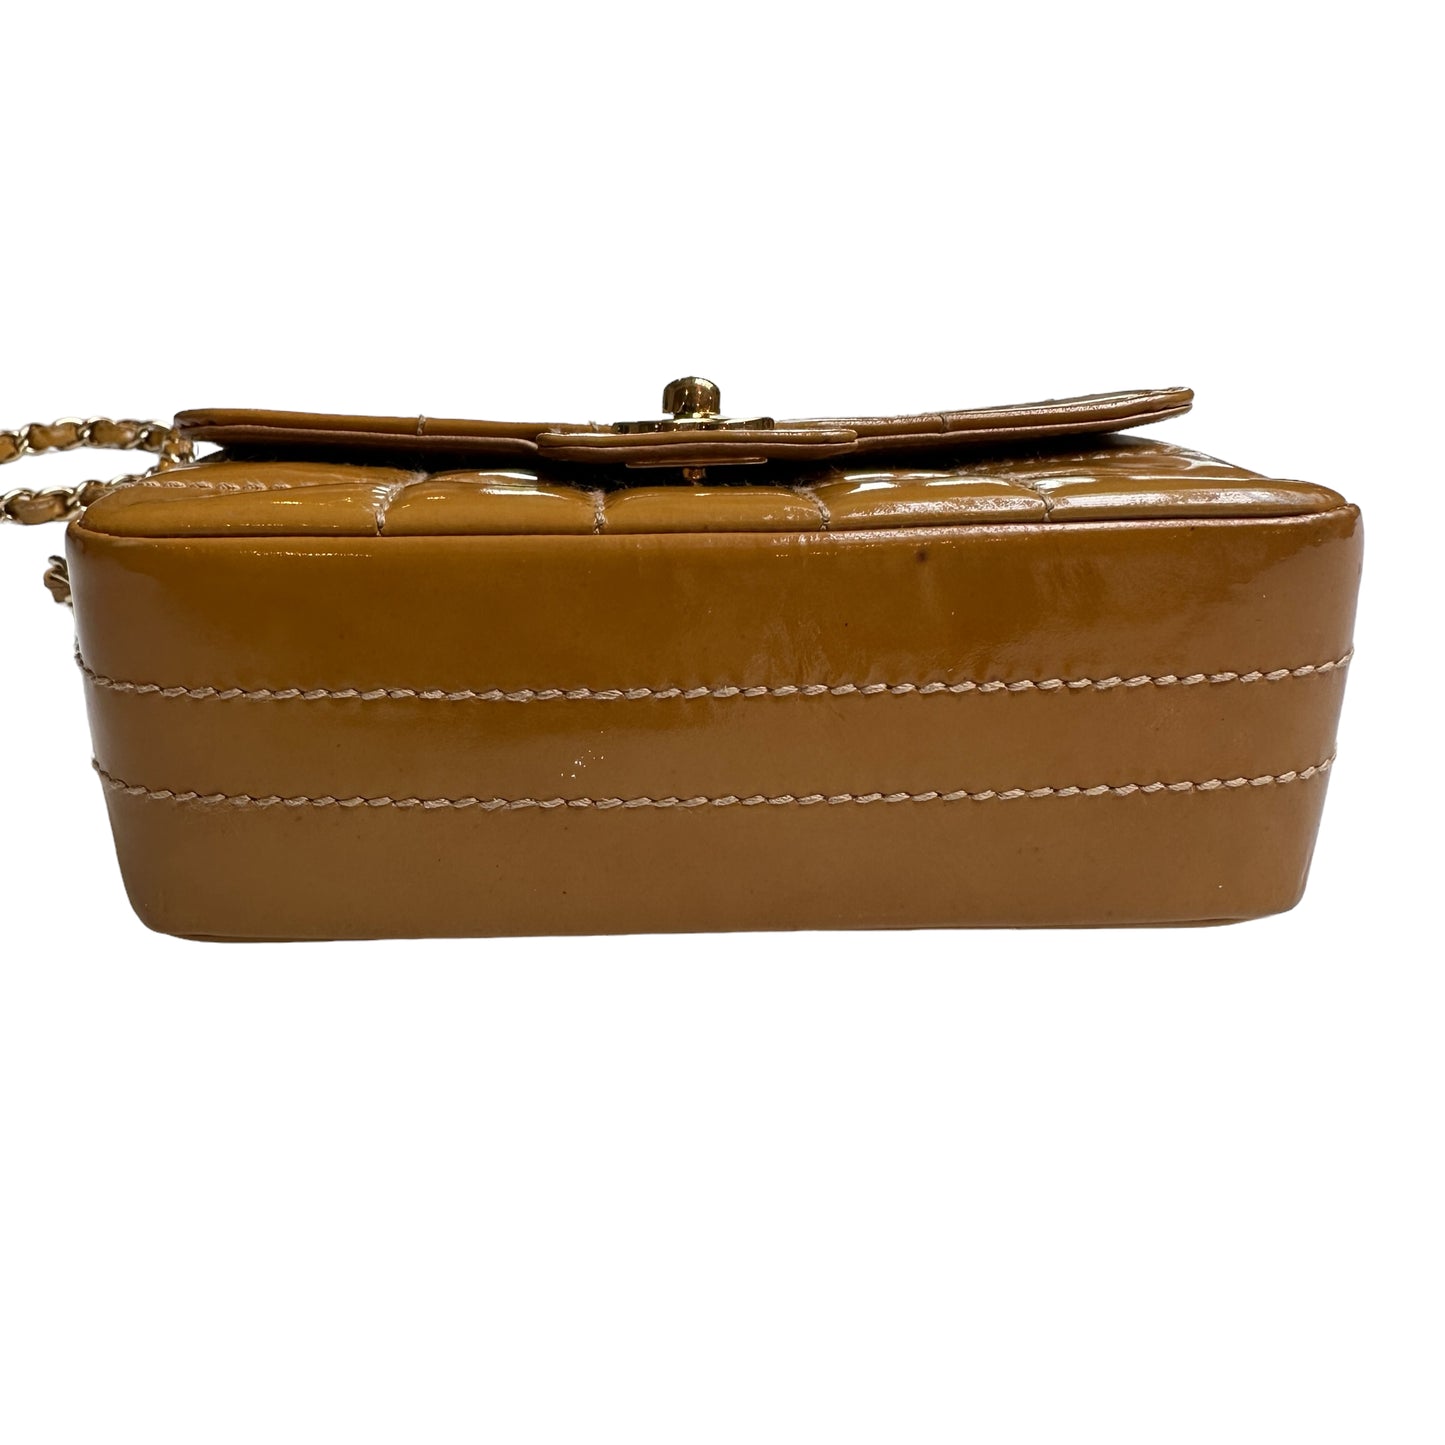 Brown Patent Leather Vintage Mini Flap Bag